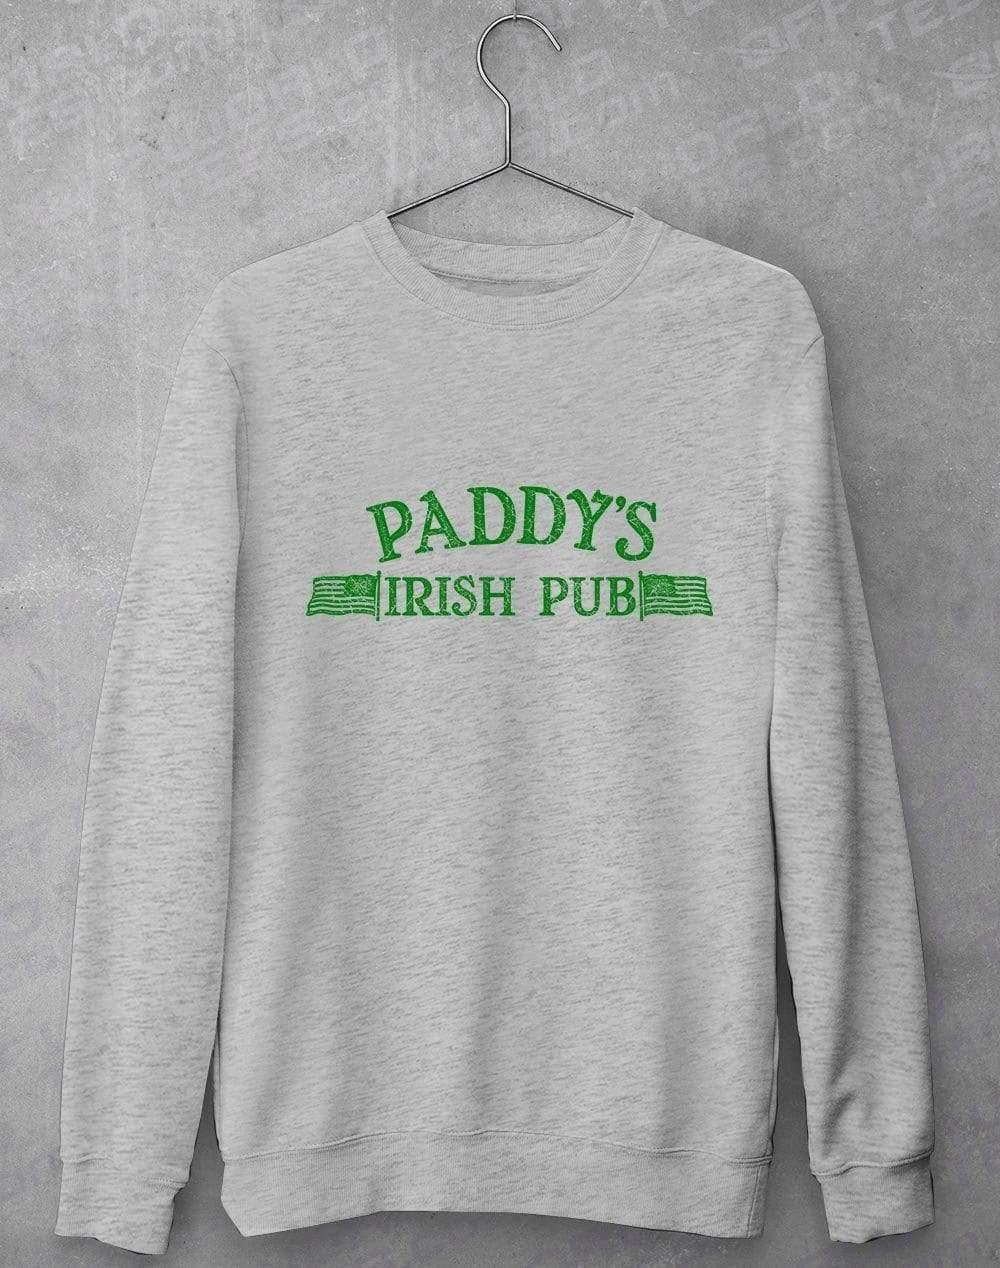 Paddys Irish Pub Sweatshirt S / Heather Grey  - Off World Tees